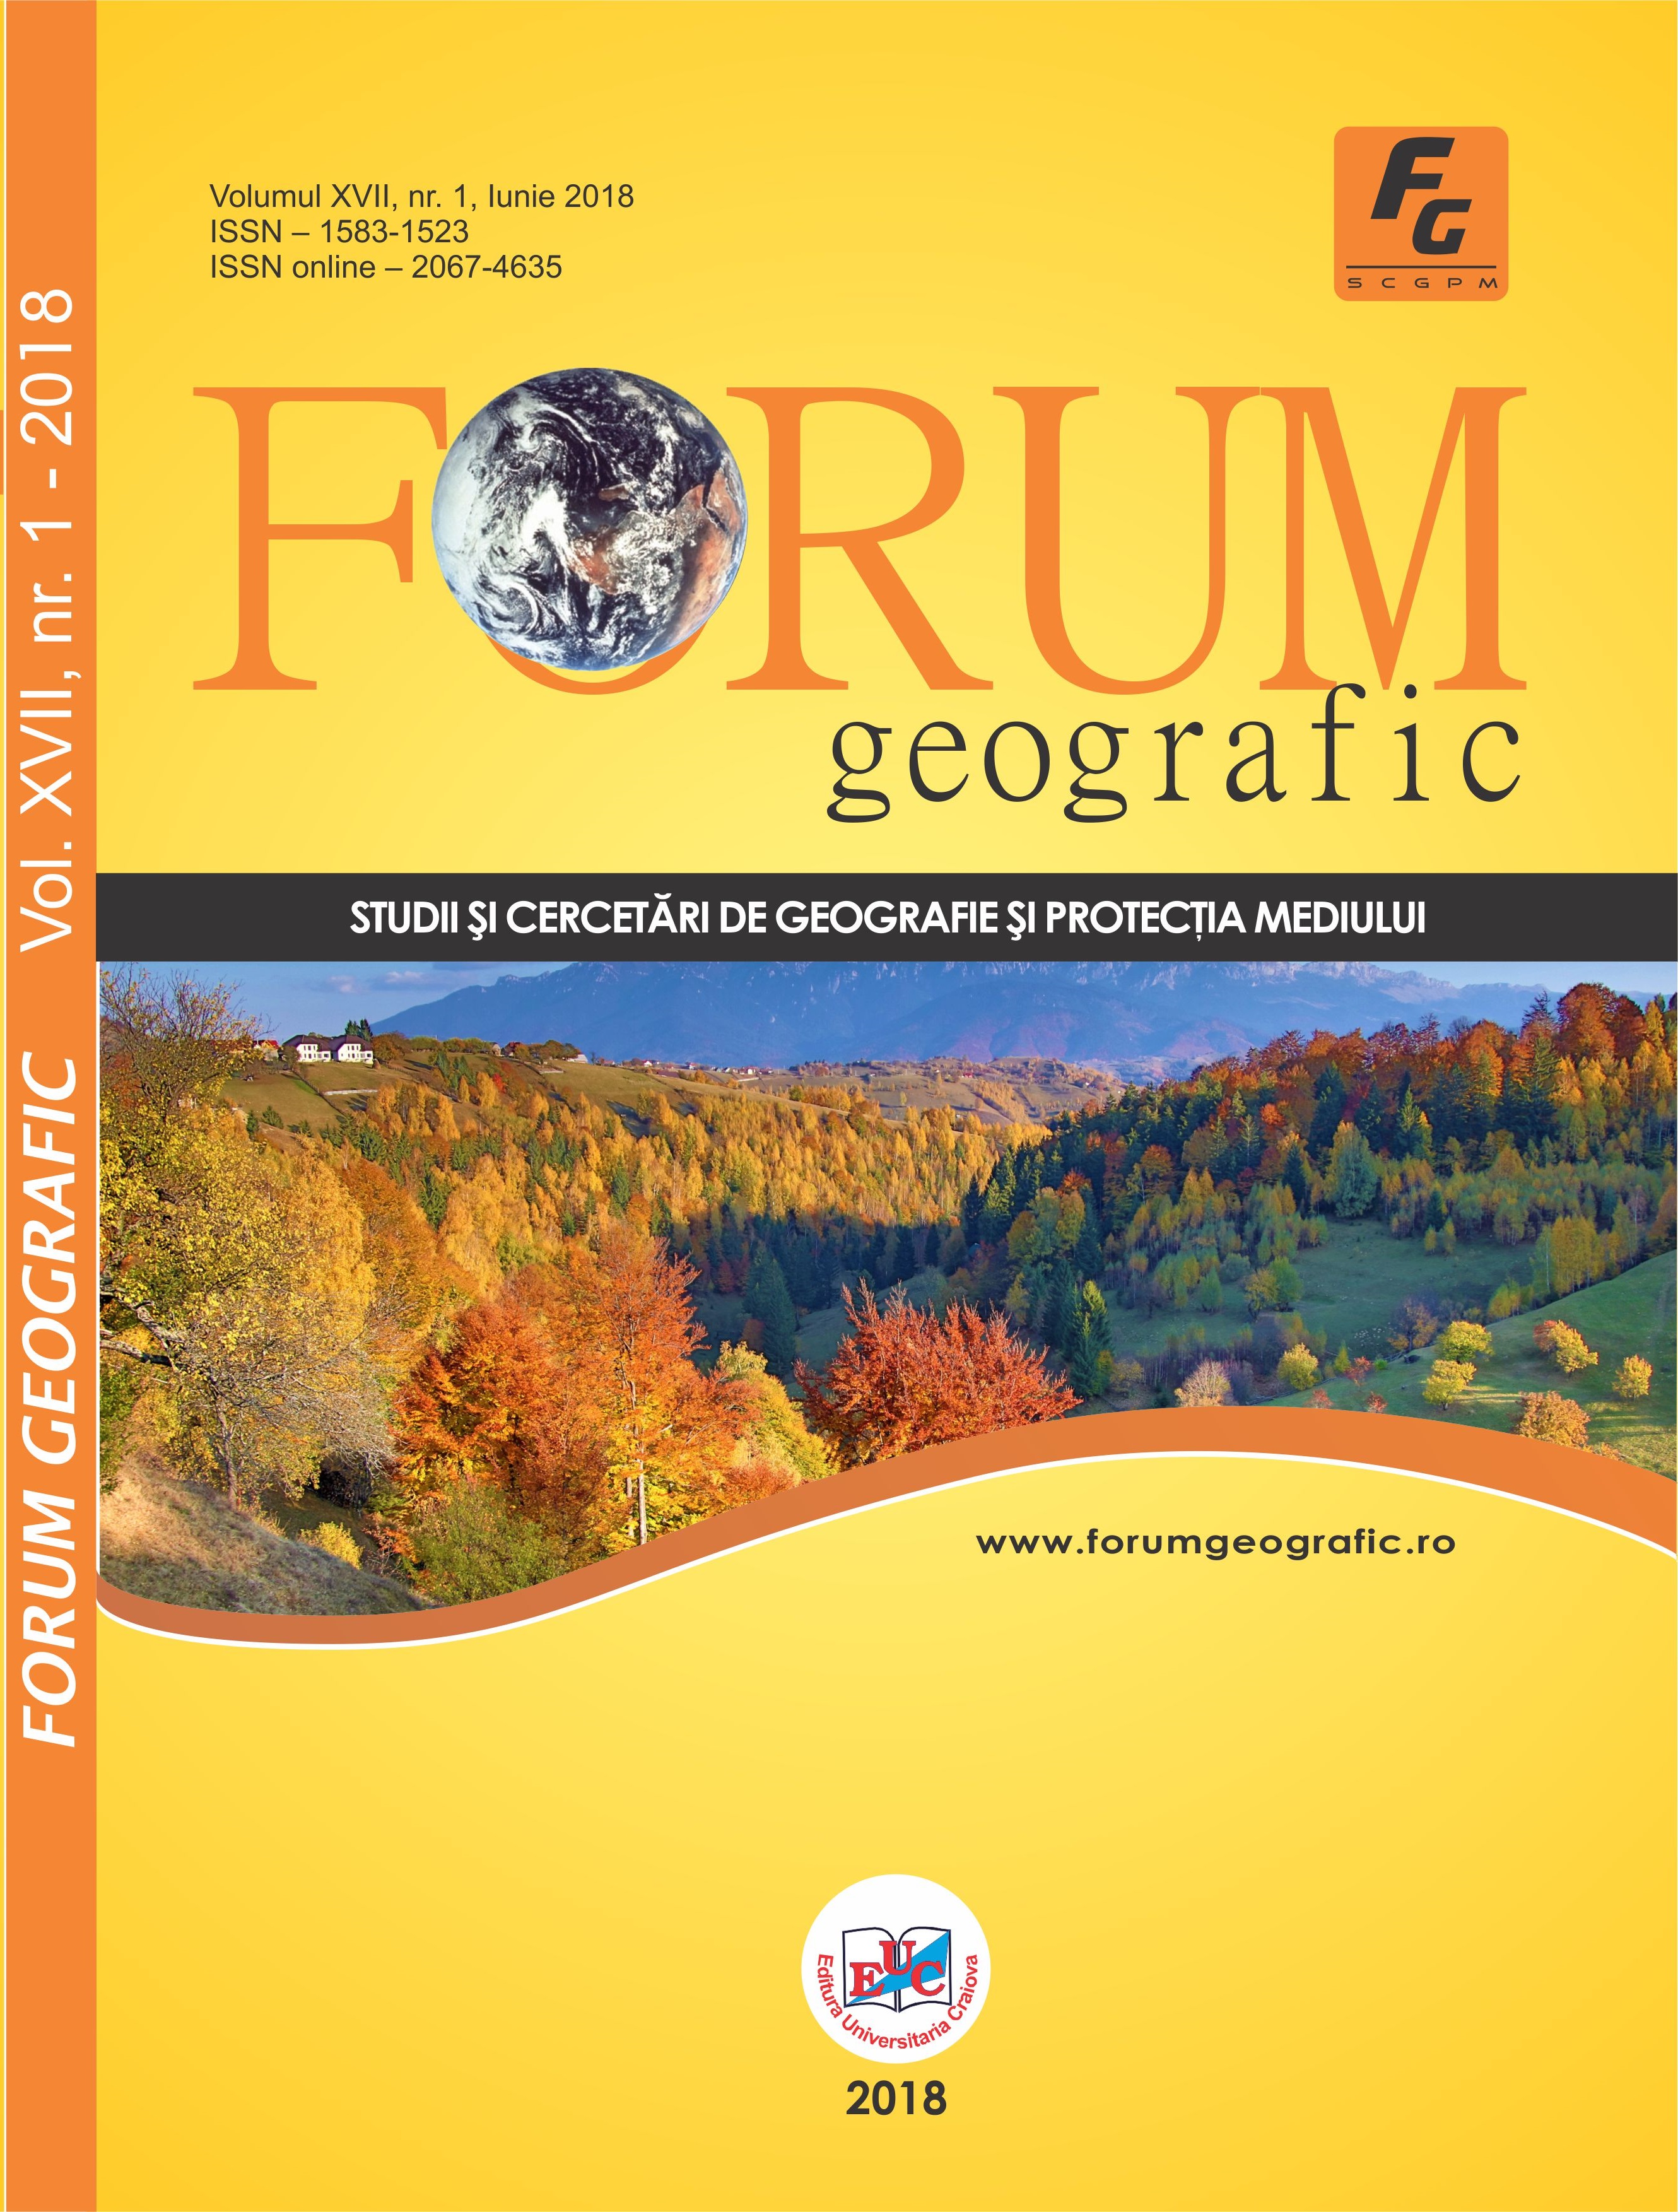 Forum geografic: Volume XVII, issue 1